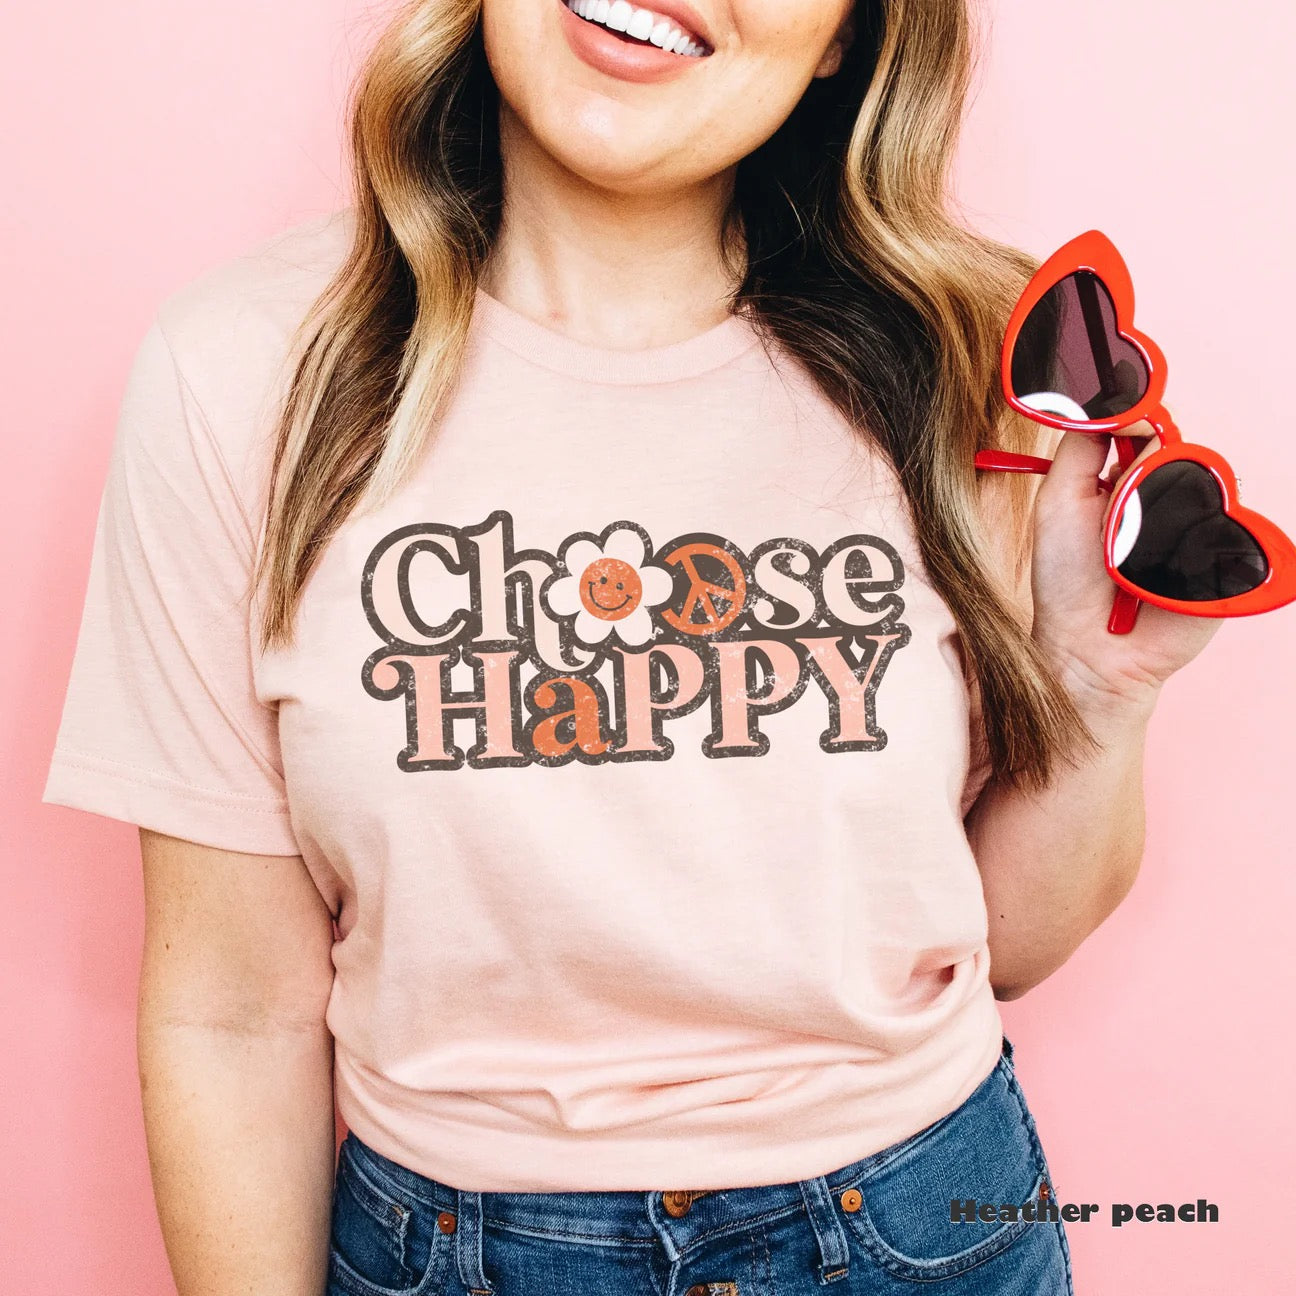 "Choose Happy" T-shirt (shown on "Hthr Peach")